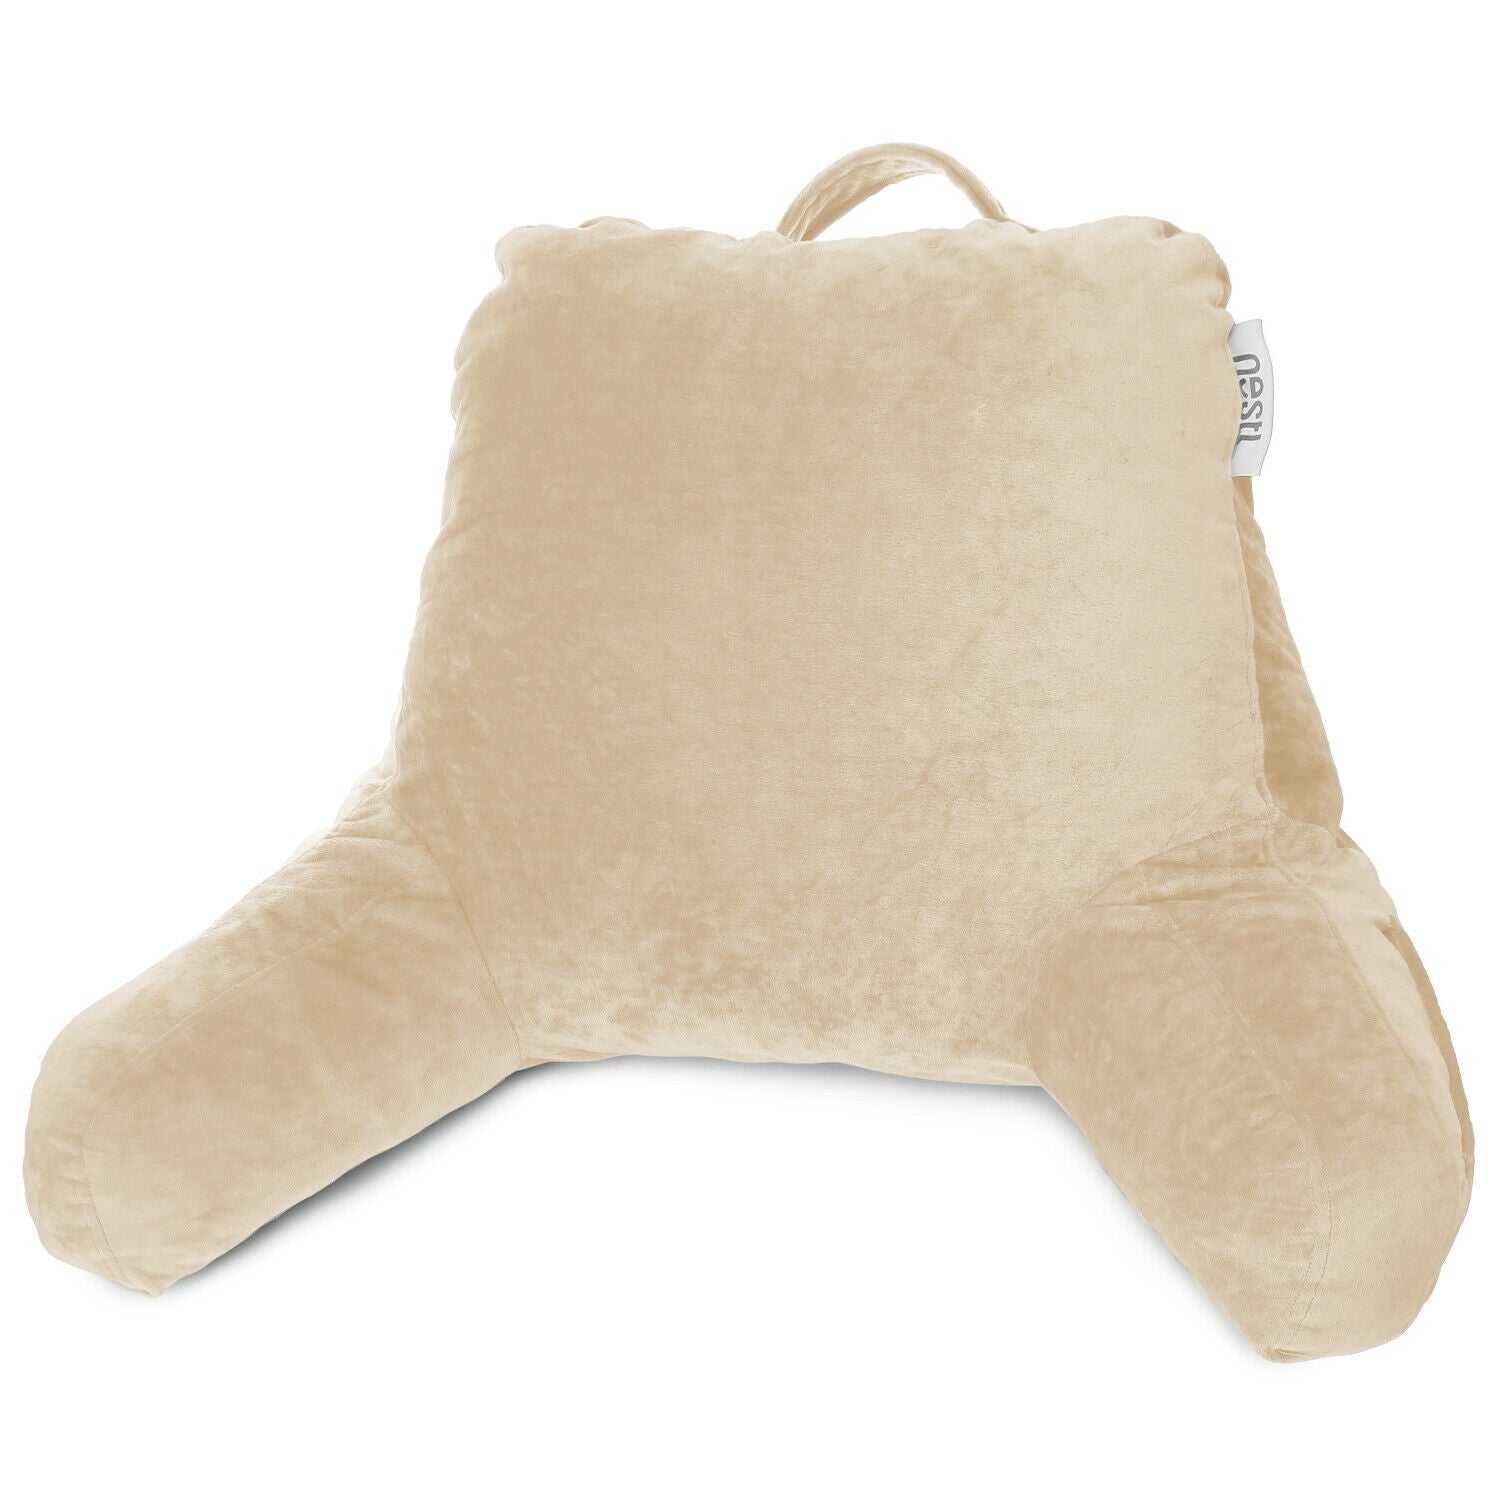 Pillows - TV & Reading Pillow - Kid's Memory Foam Bedrest Back Pillow 12 Colors! - Beige Cream